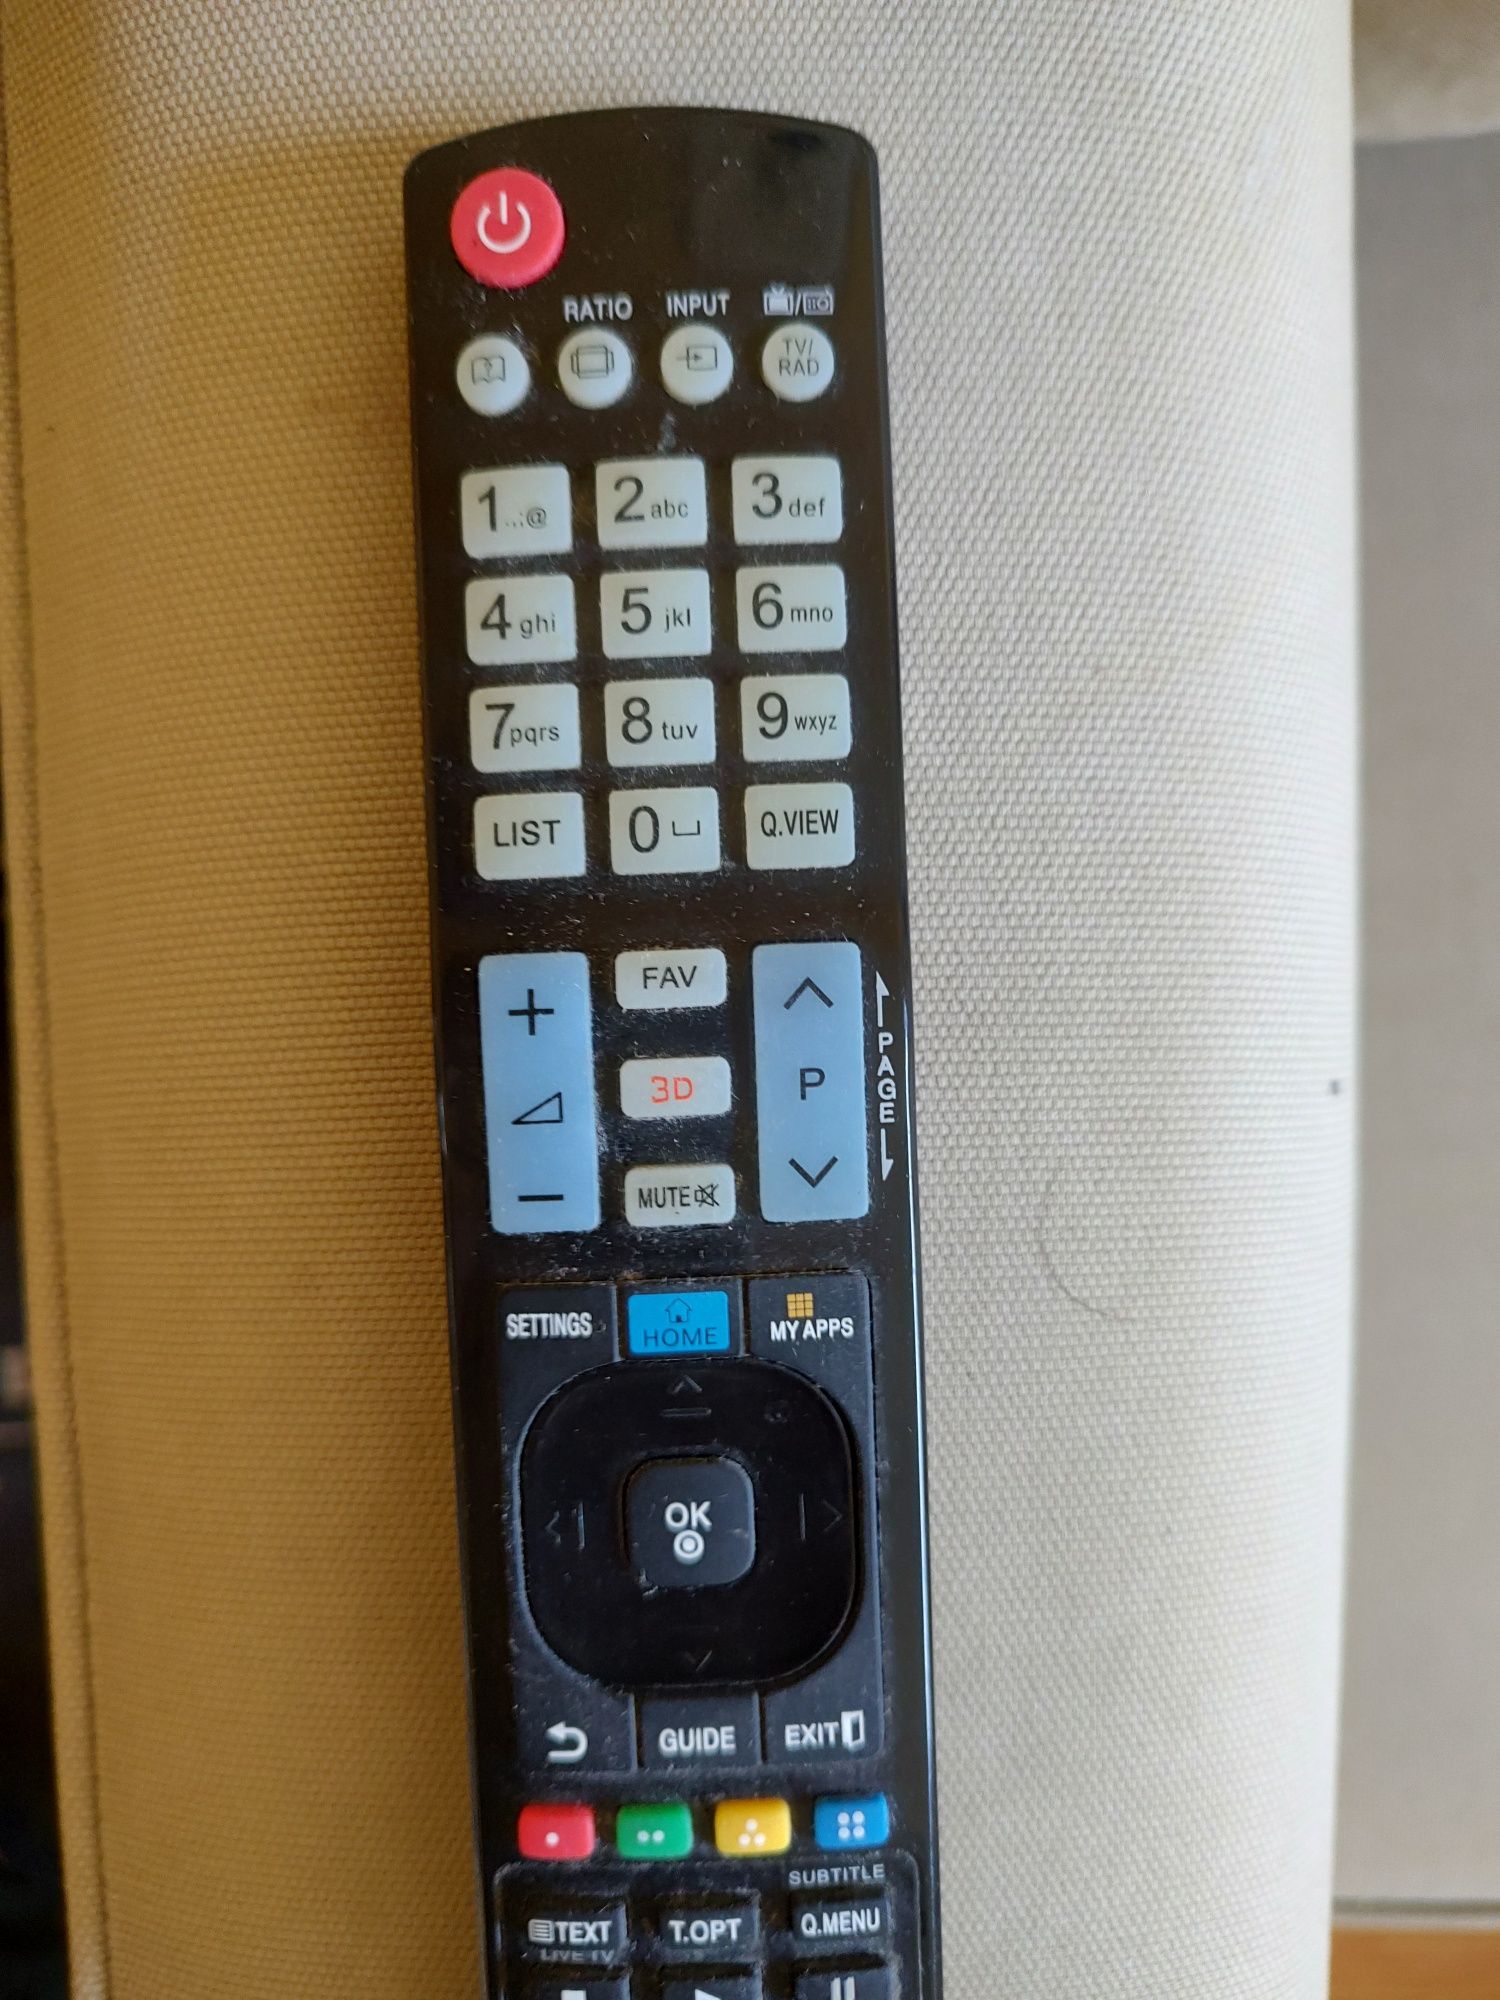 Telewizor LG LCD 3d 42cale